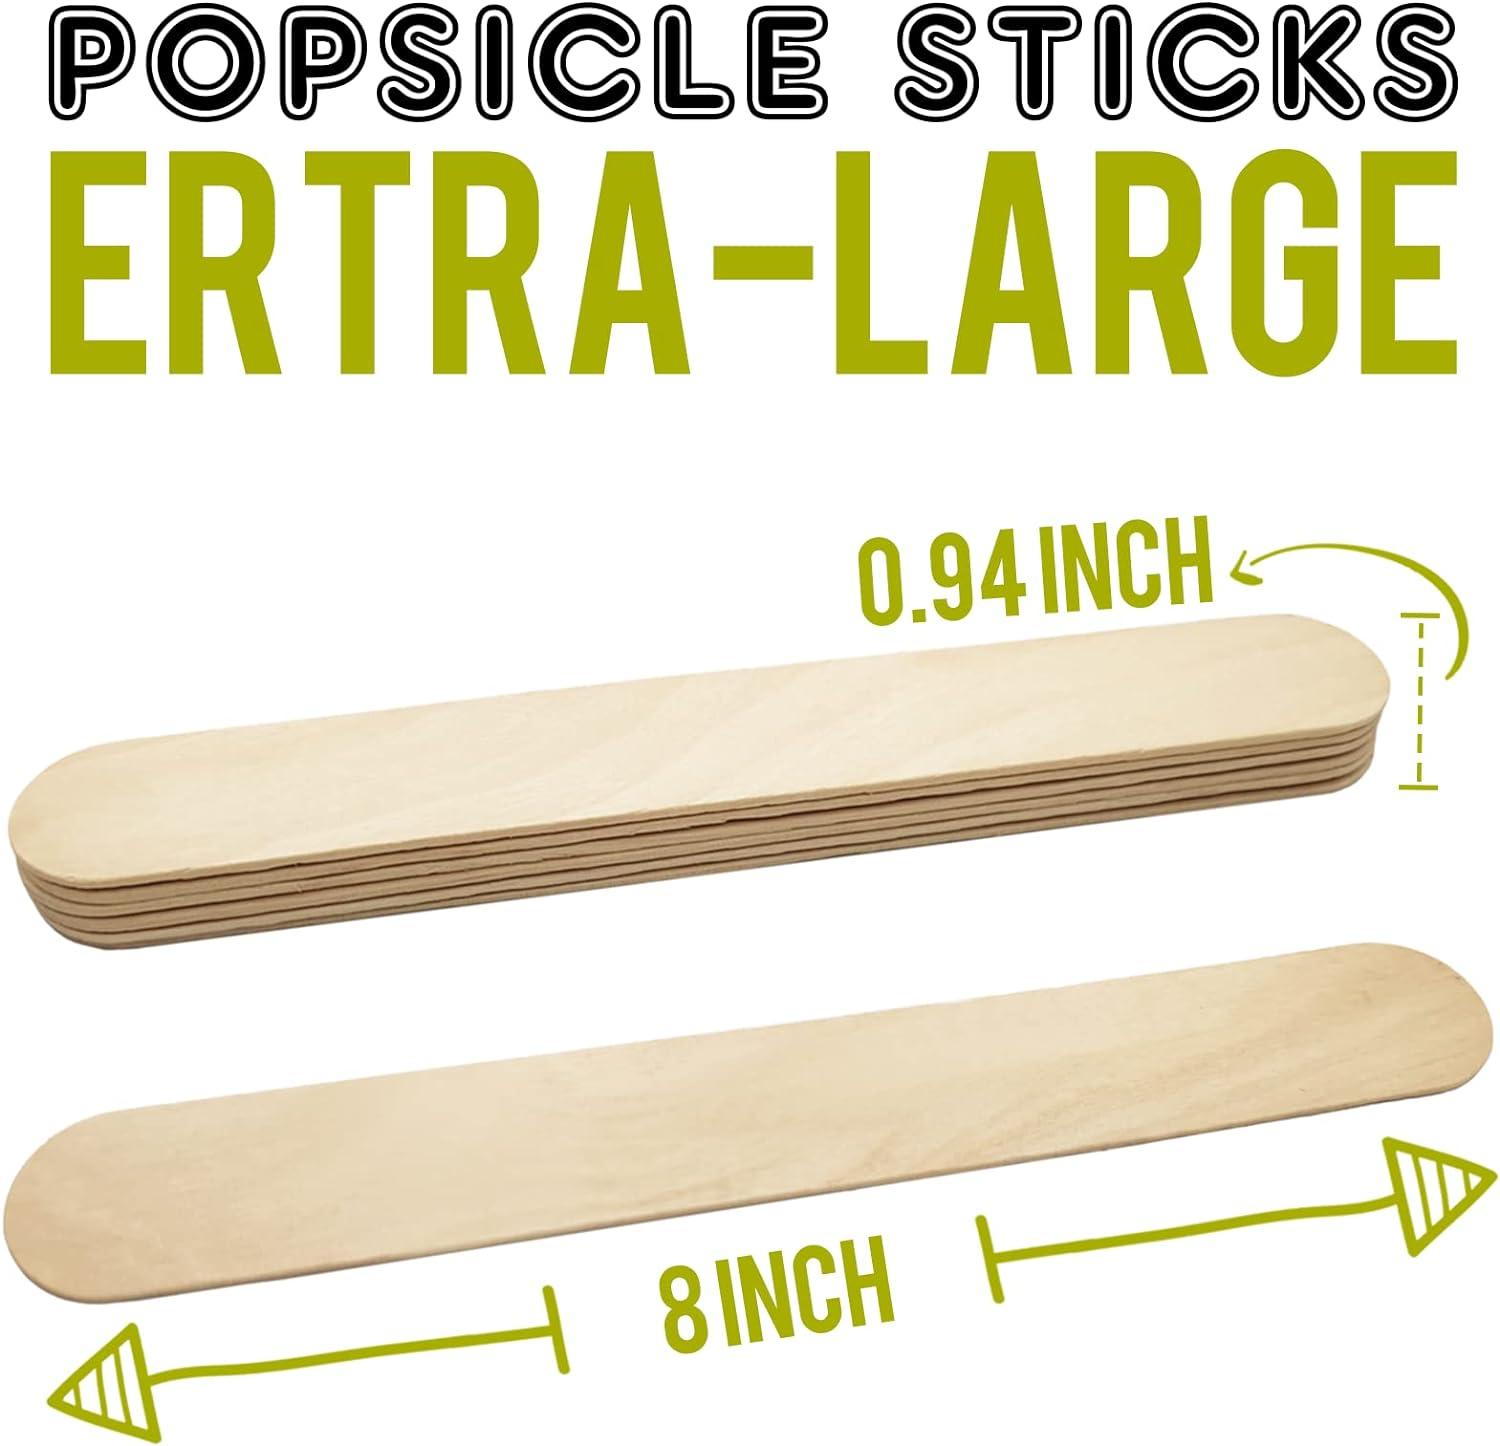 Spa Stix Large Jumbo Waxing Sticks - 6 x 3/4 Pack of 100 Jumbo Sticks